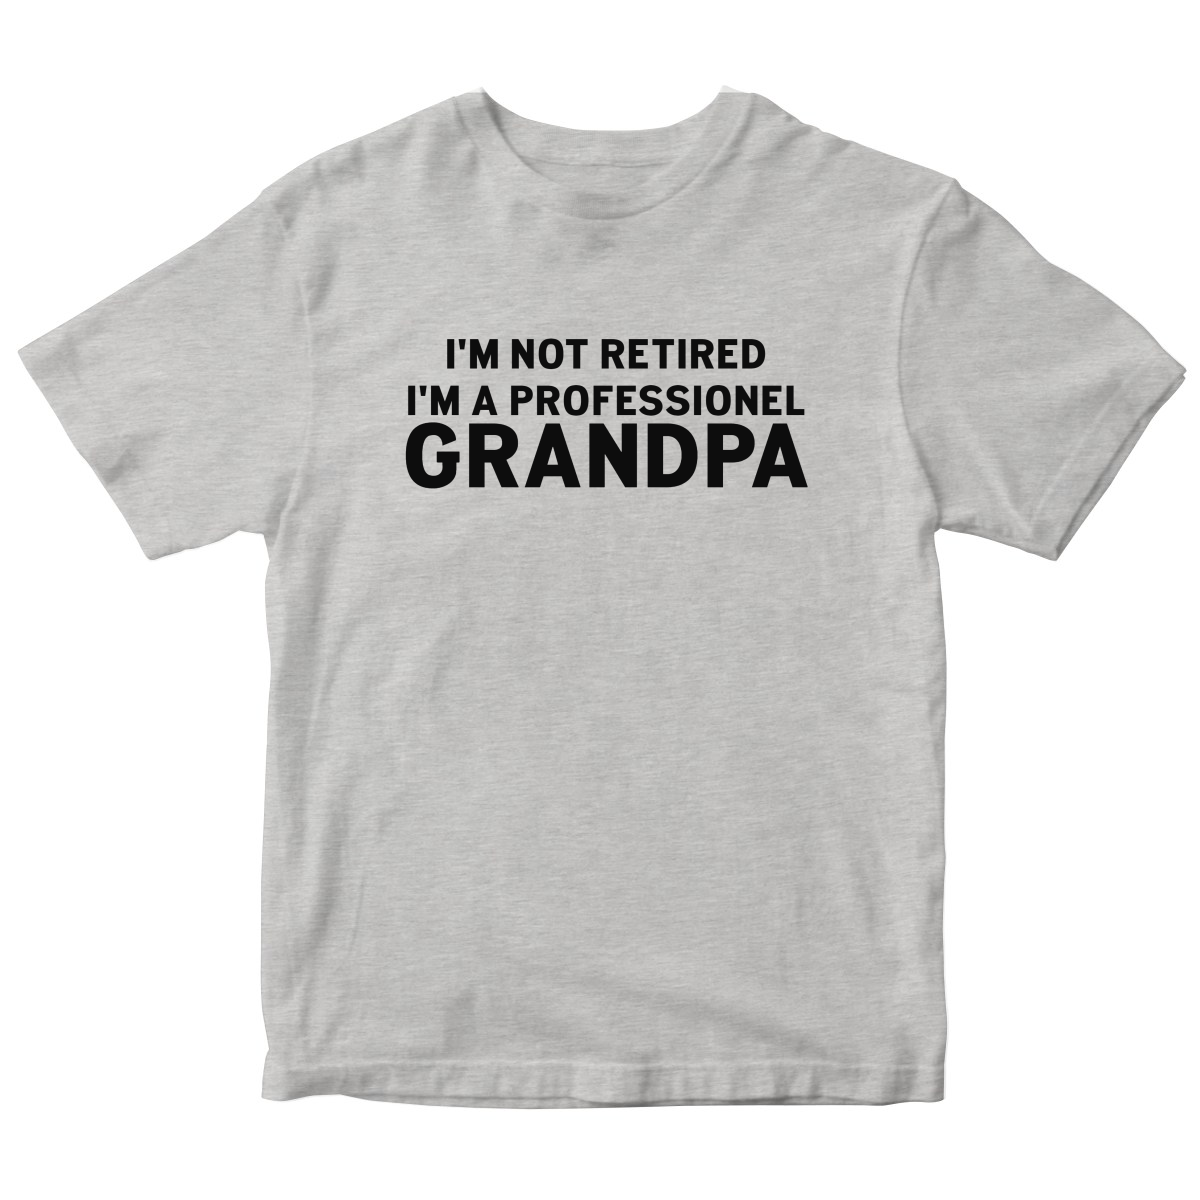  I'm A Professional Grandpa  Toddler T-shirt | Gray